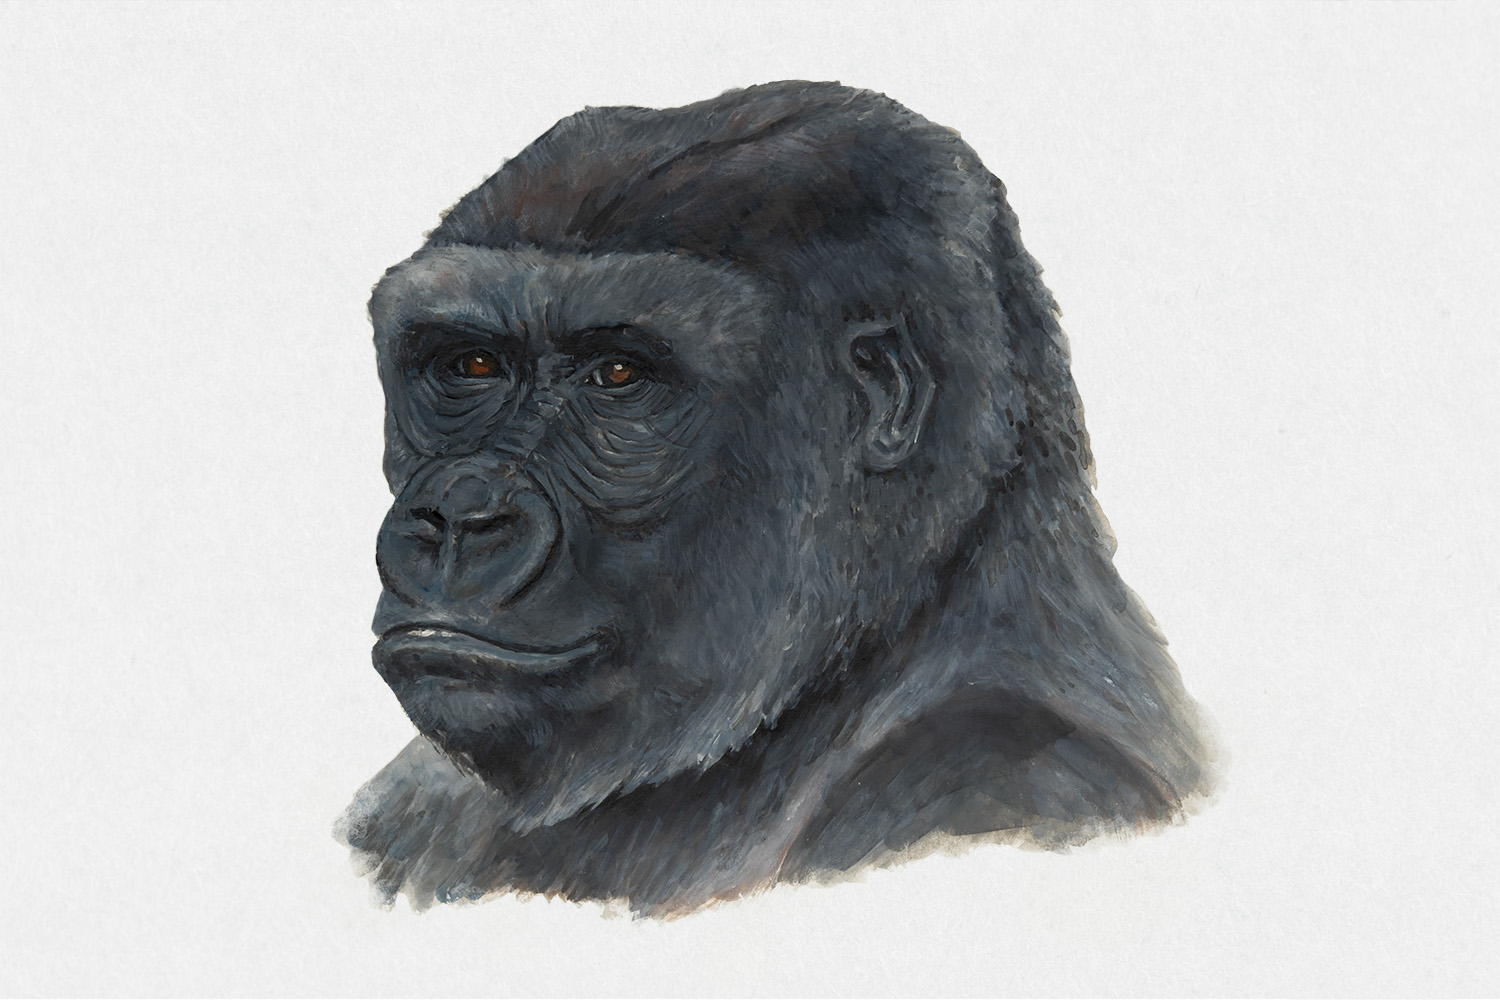 Cabeza de Gorilla Gorilla Gorilla en ilustración científica